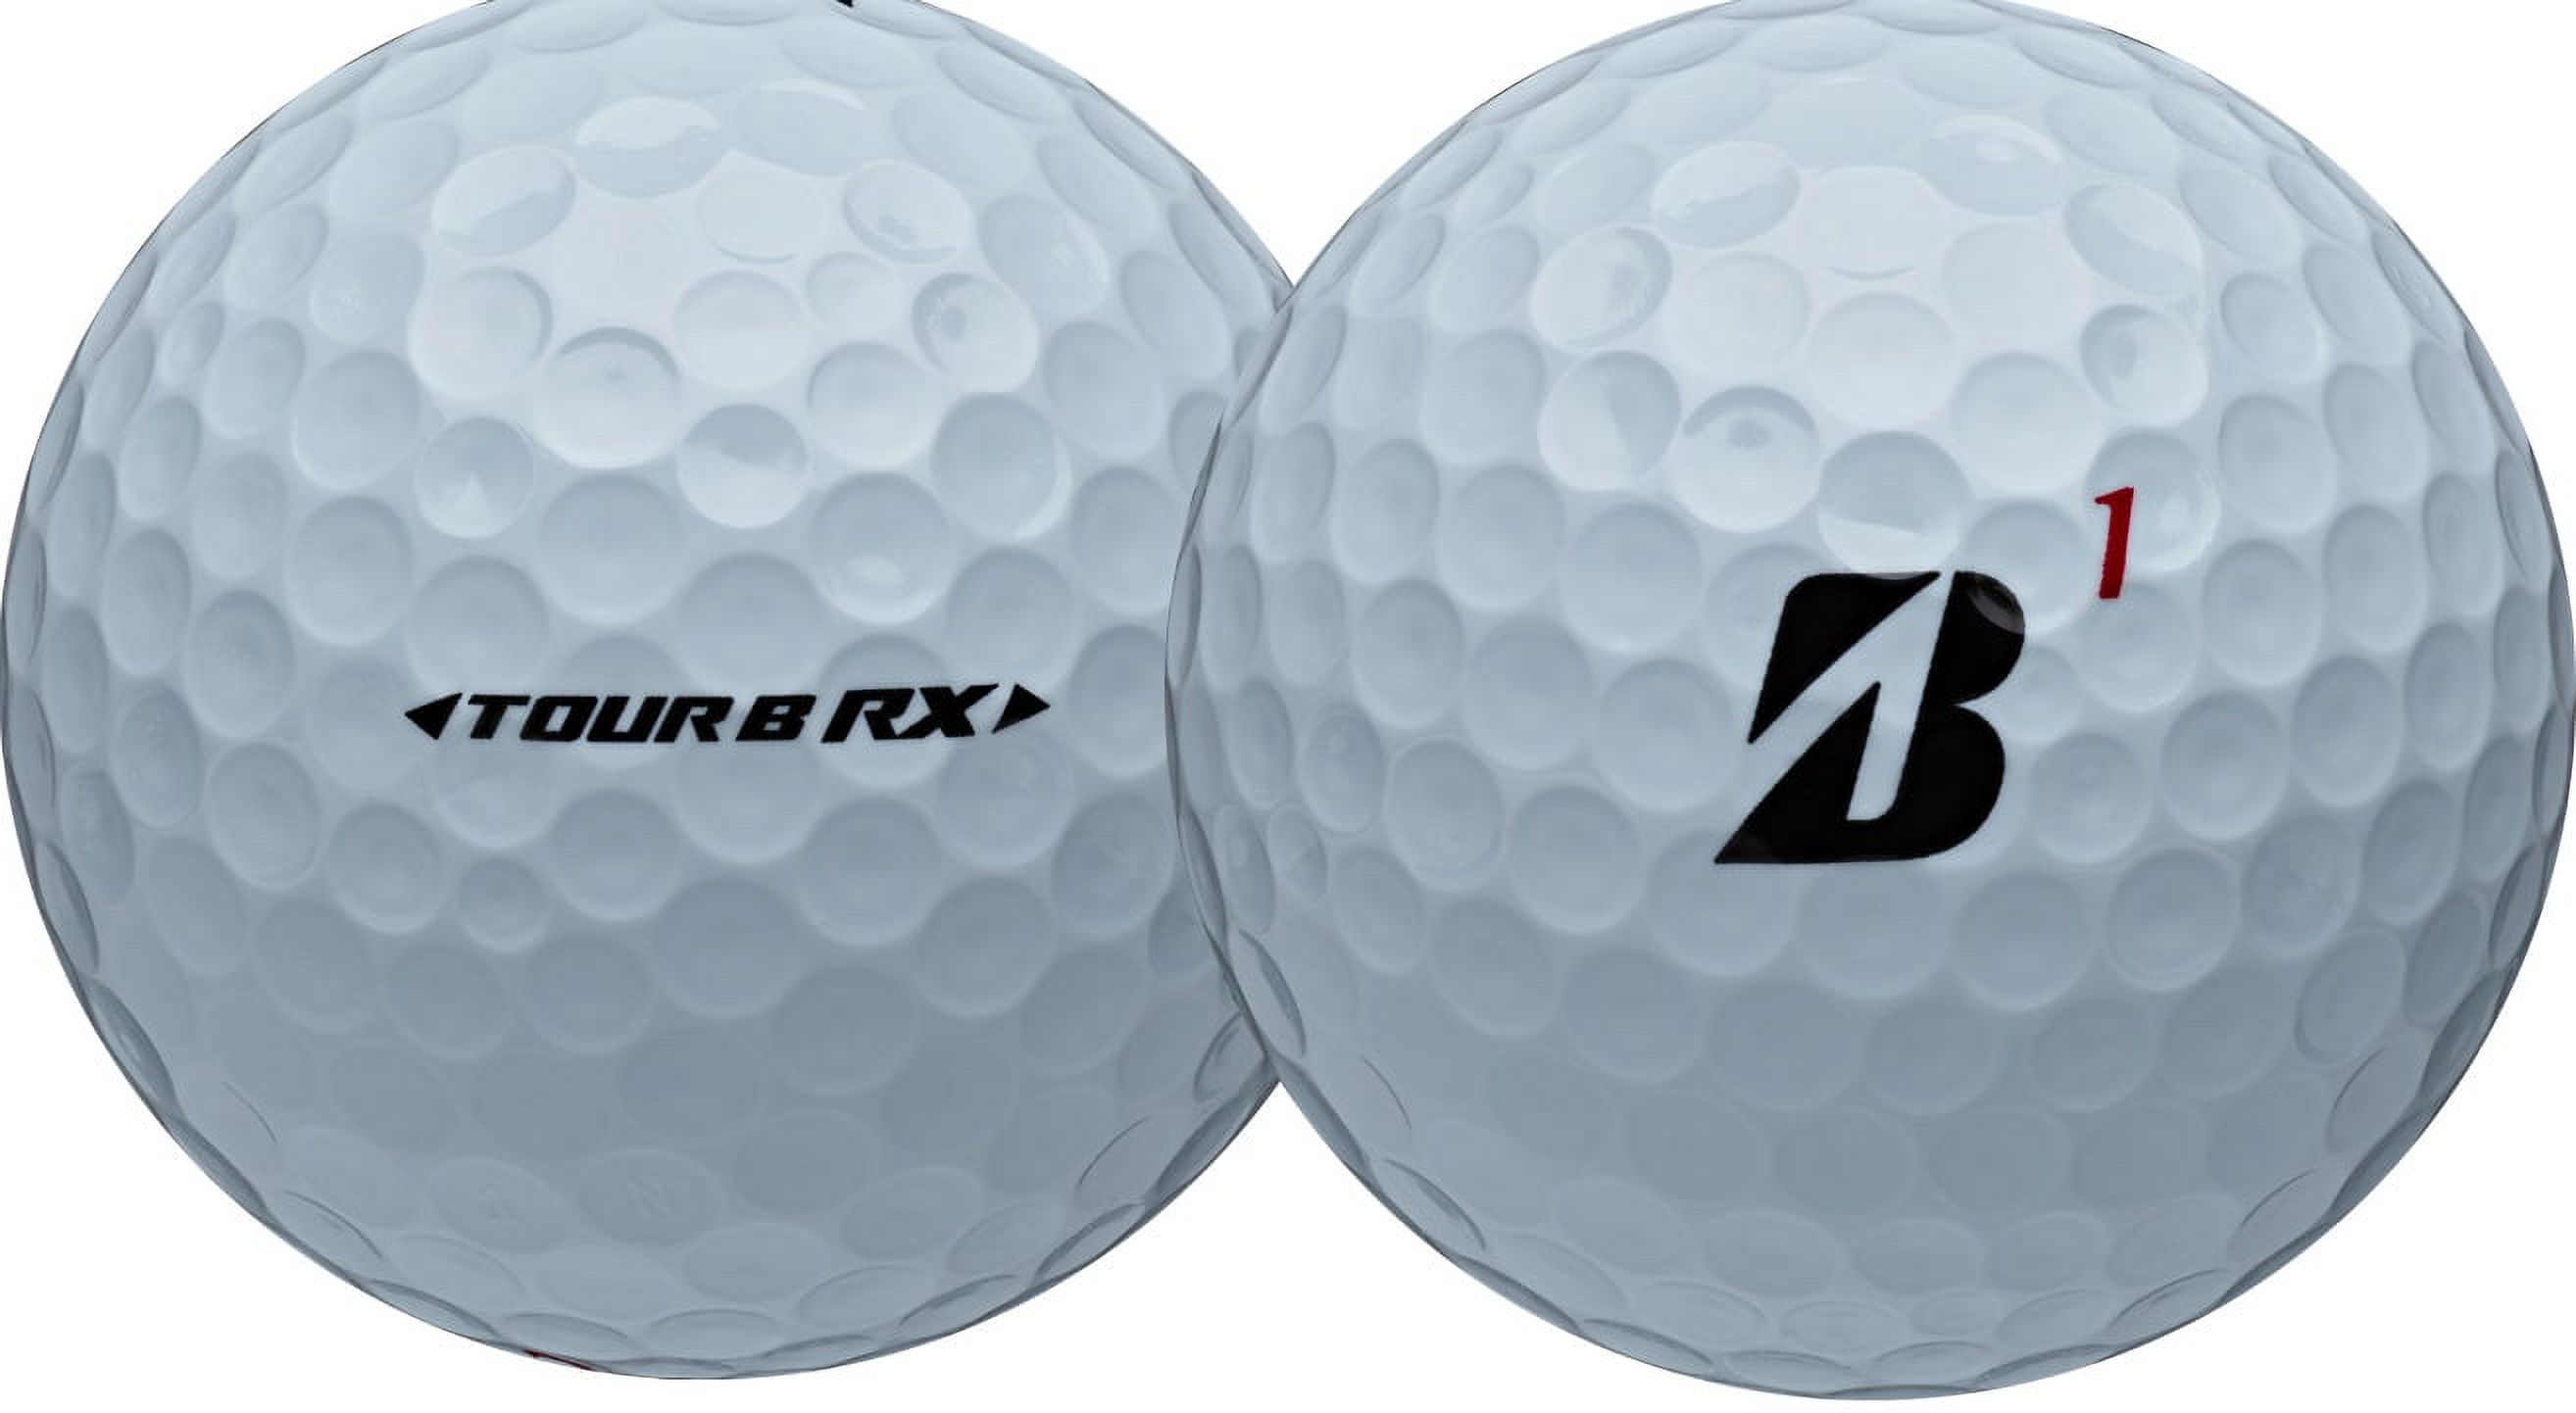 Bridgestone Golf Tour B RX Golf Balls, 12 Pack - image 2 of 4